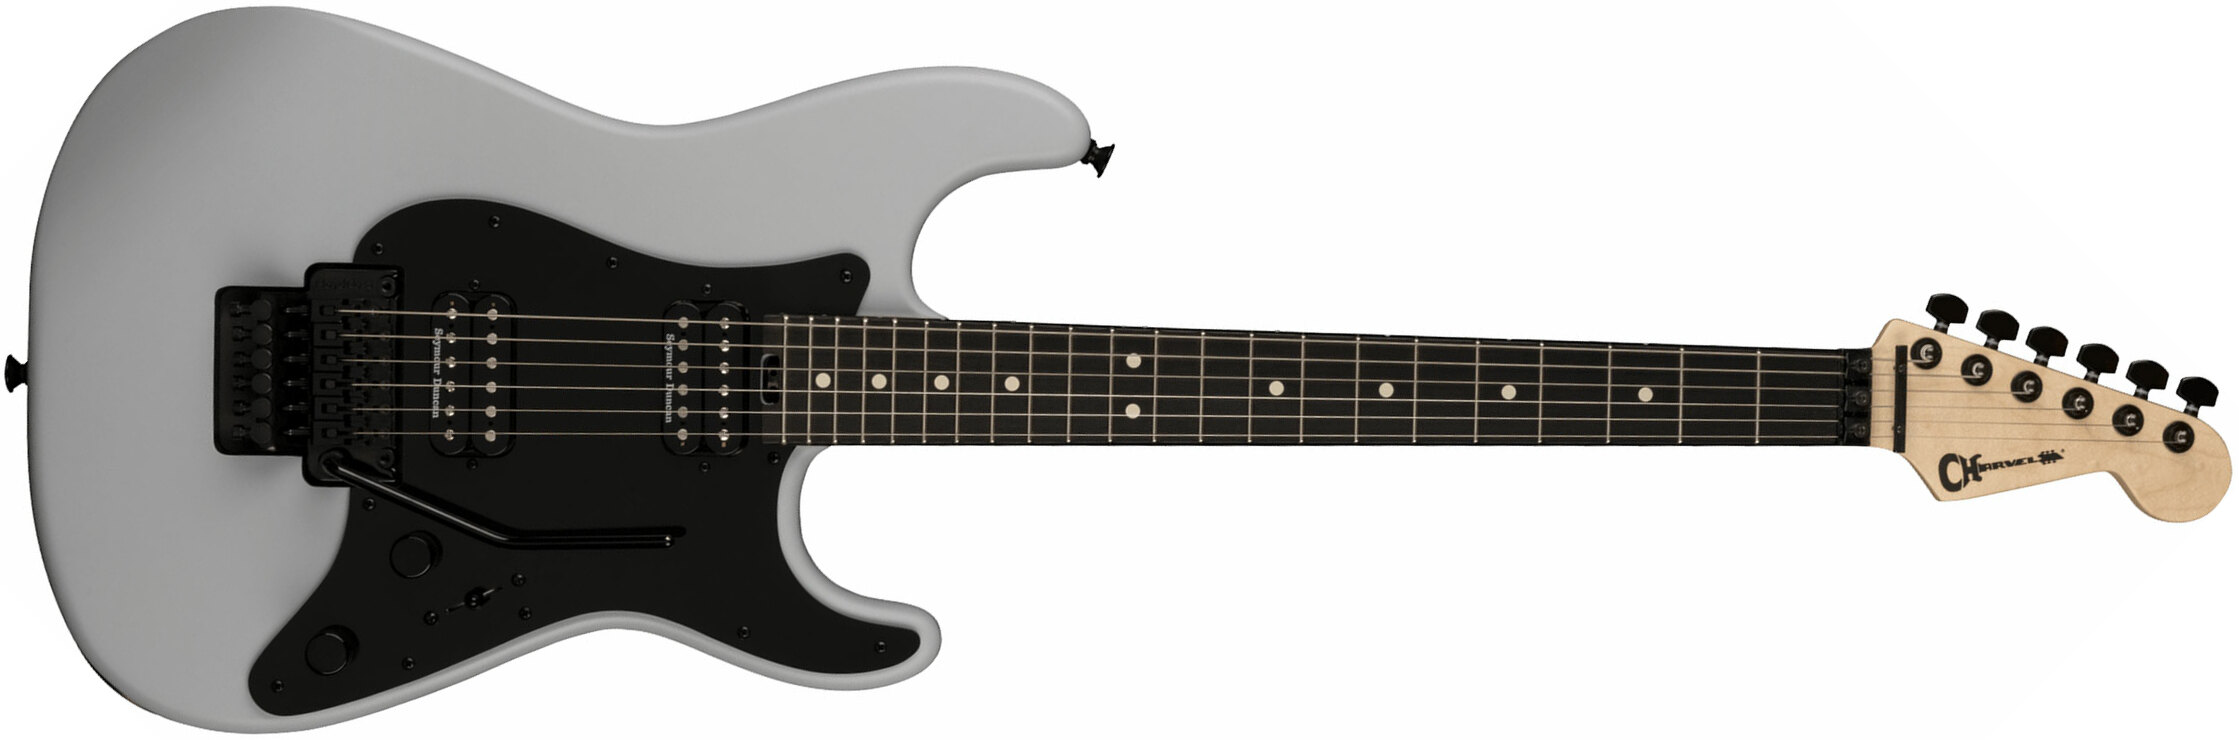 Charvel So-cal Style 1 Hh Fr E Pro-mod 2h Seymour Duncan Eb - Satin Primer Gray - Str shape electric guitar - Main picture